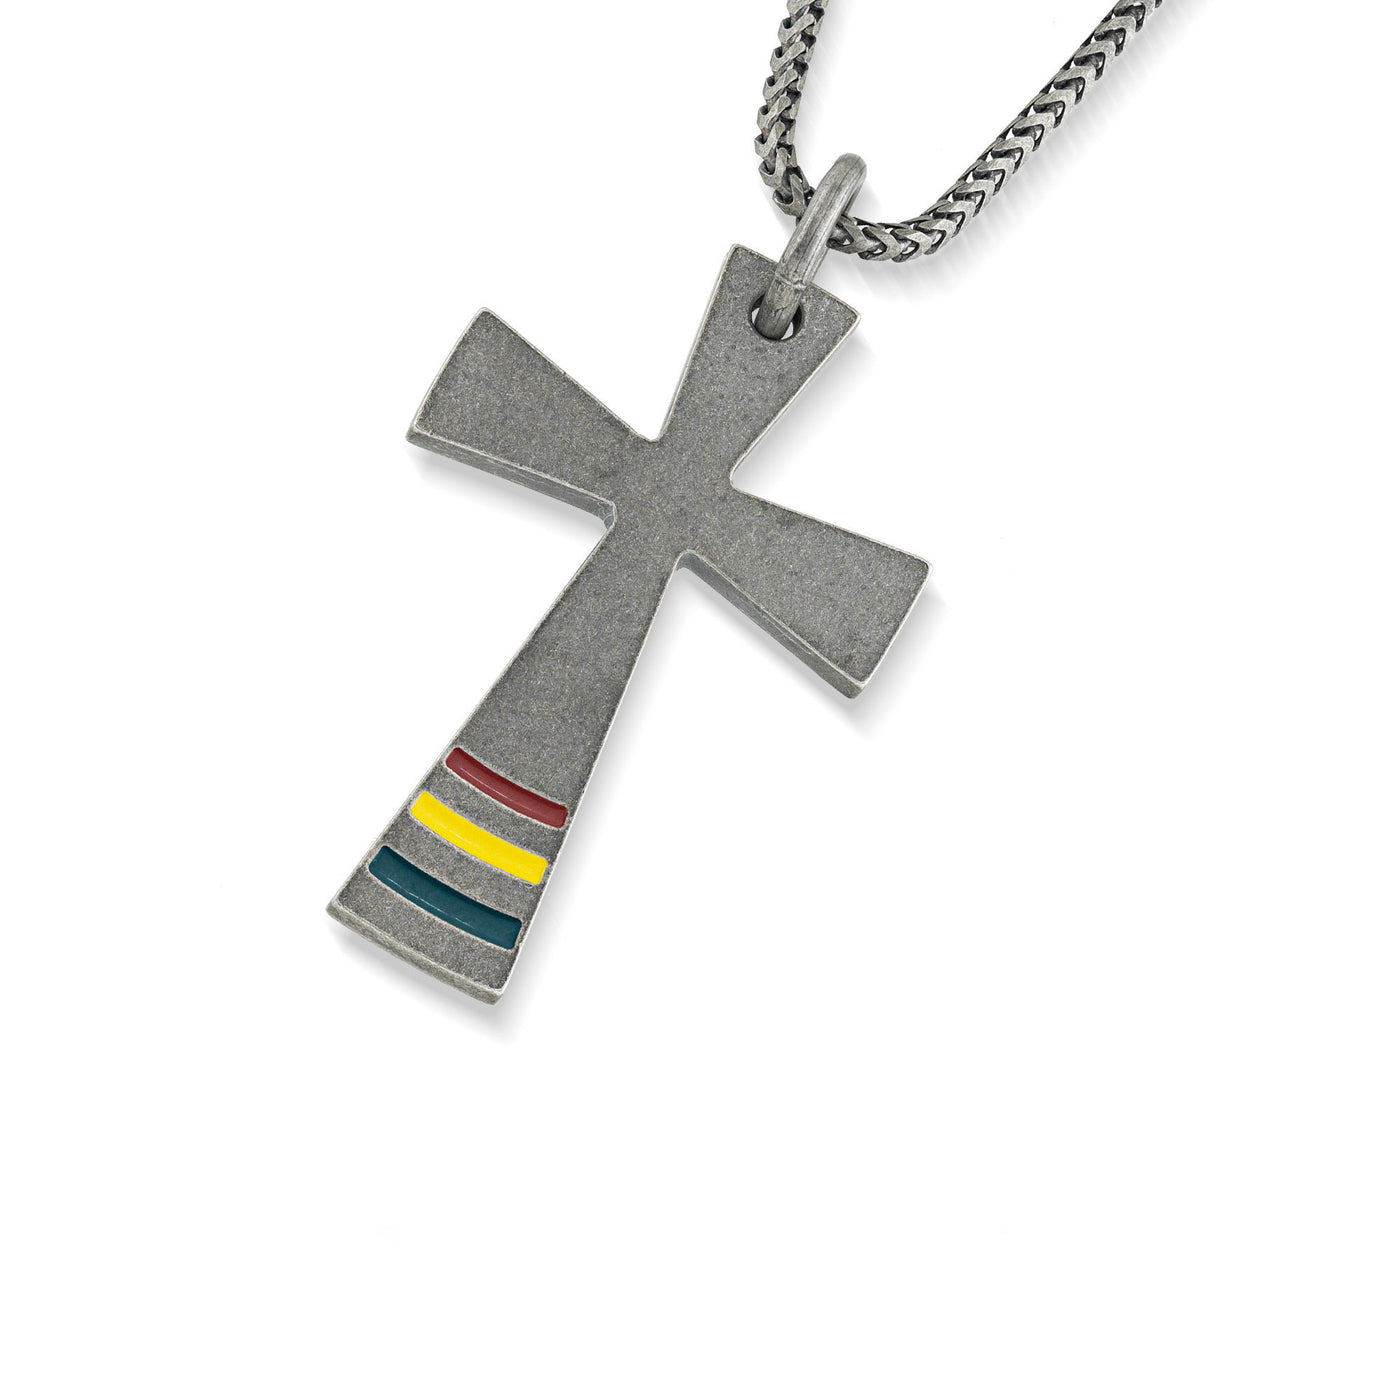 The Cross Rainbow Pendant